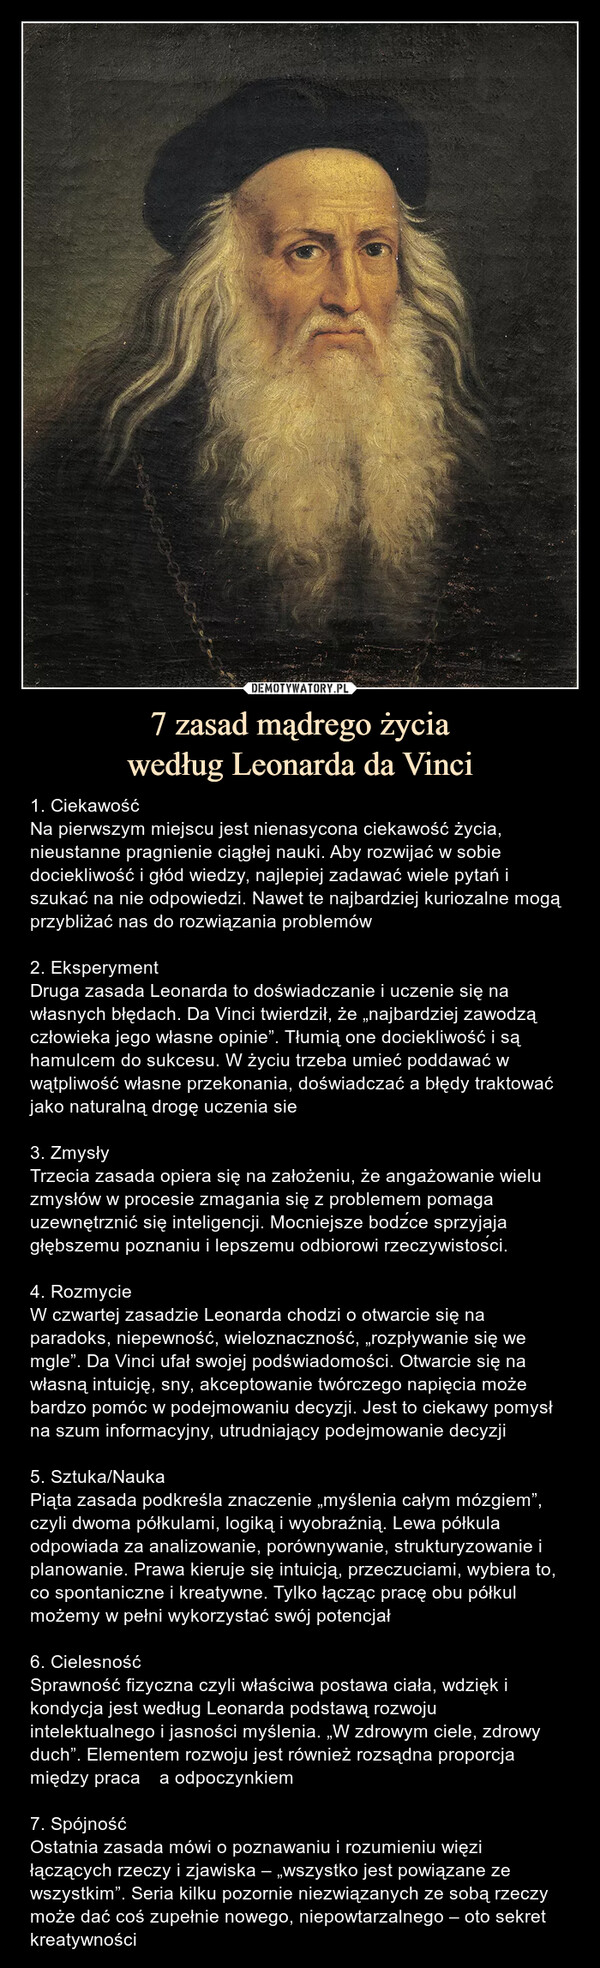 7 zasad mądrego życia
według Leonarda da Vinci